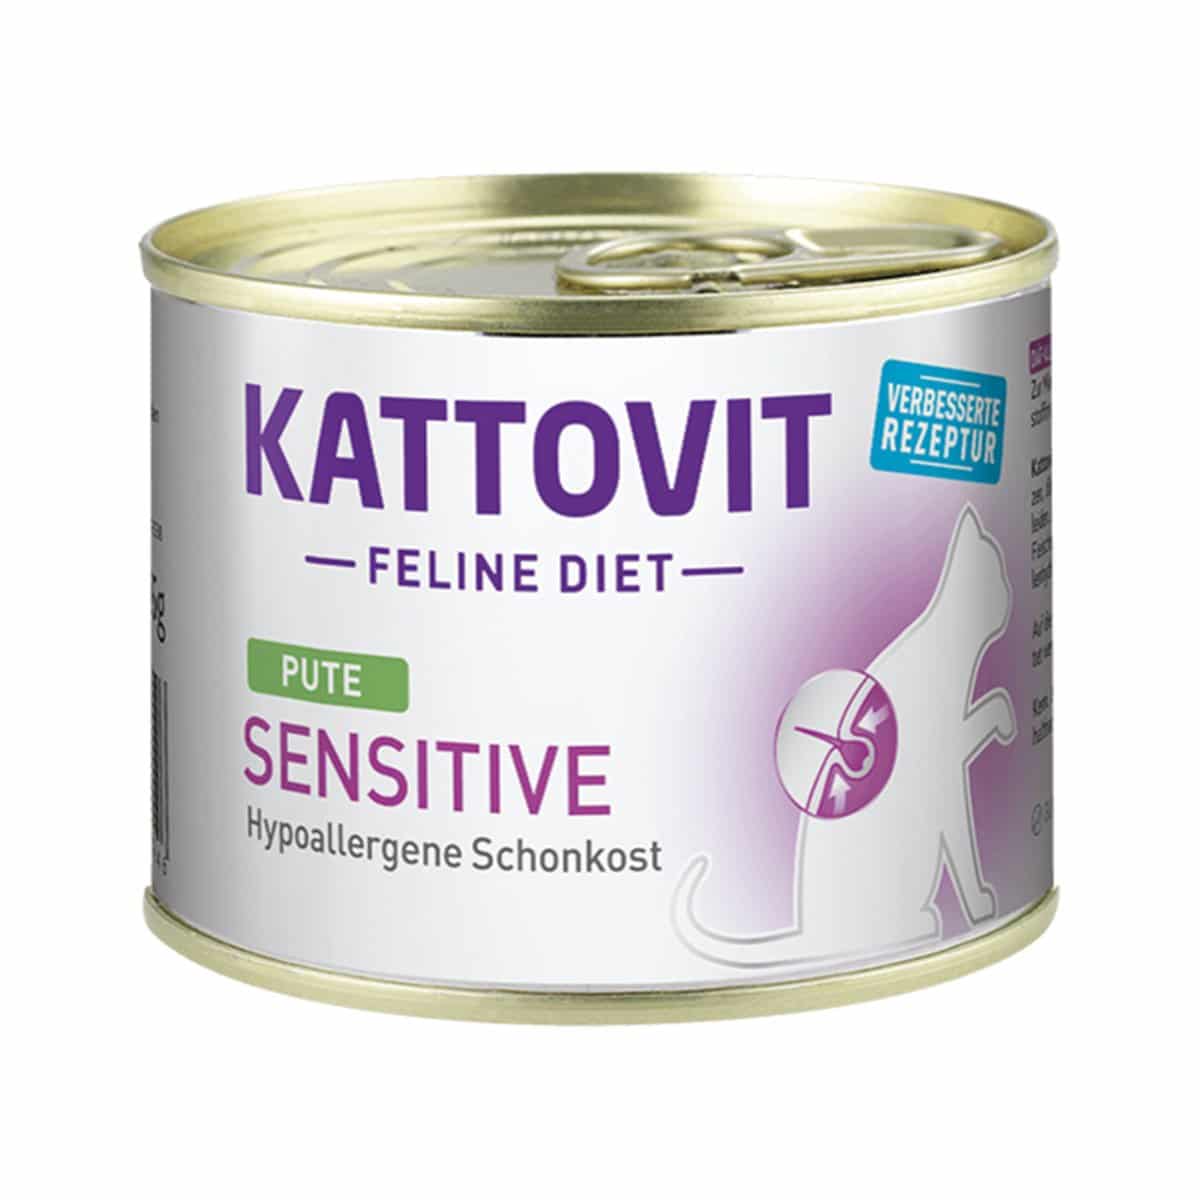 KATTOVIT Feline Diet Sensitive Pute 12x85g